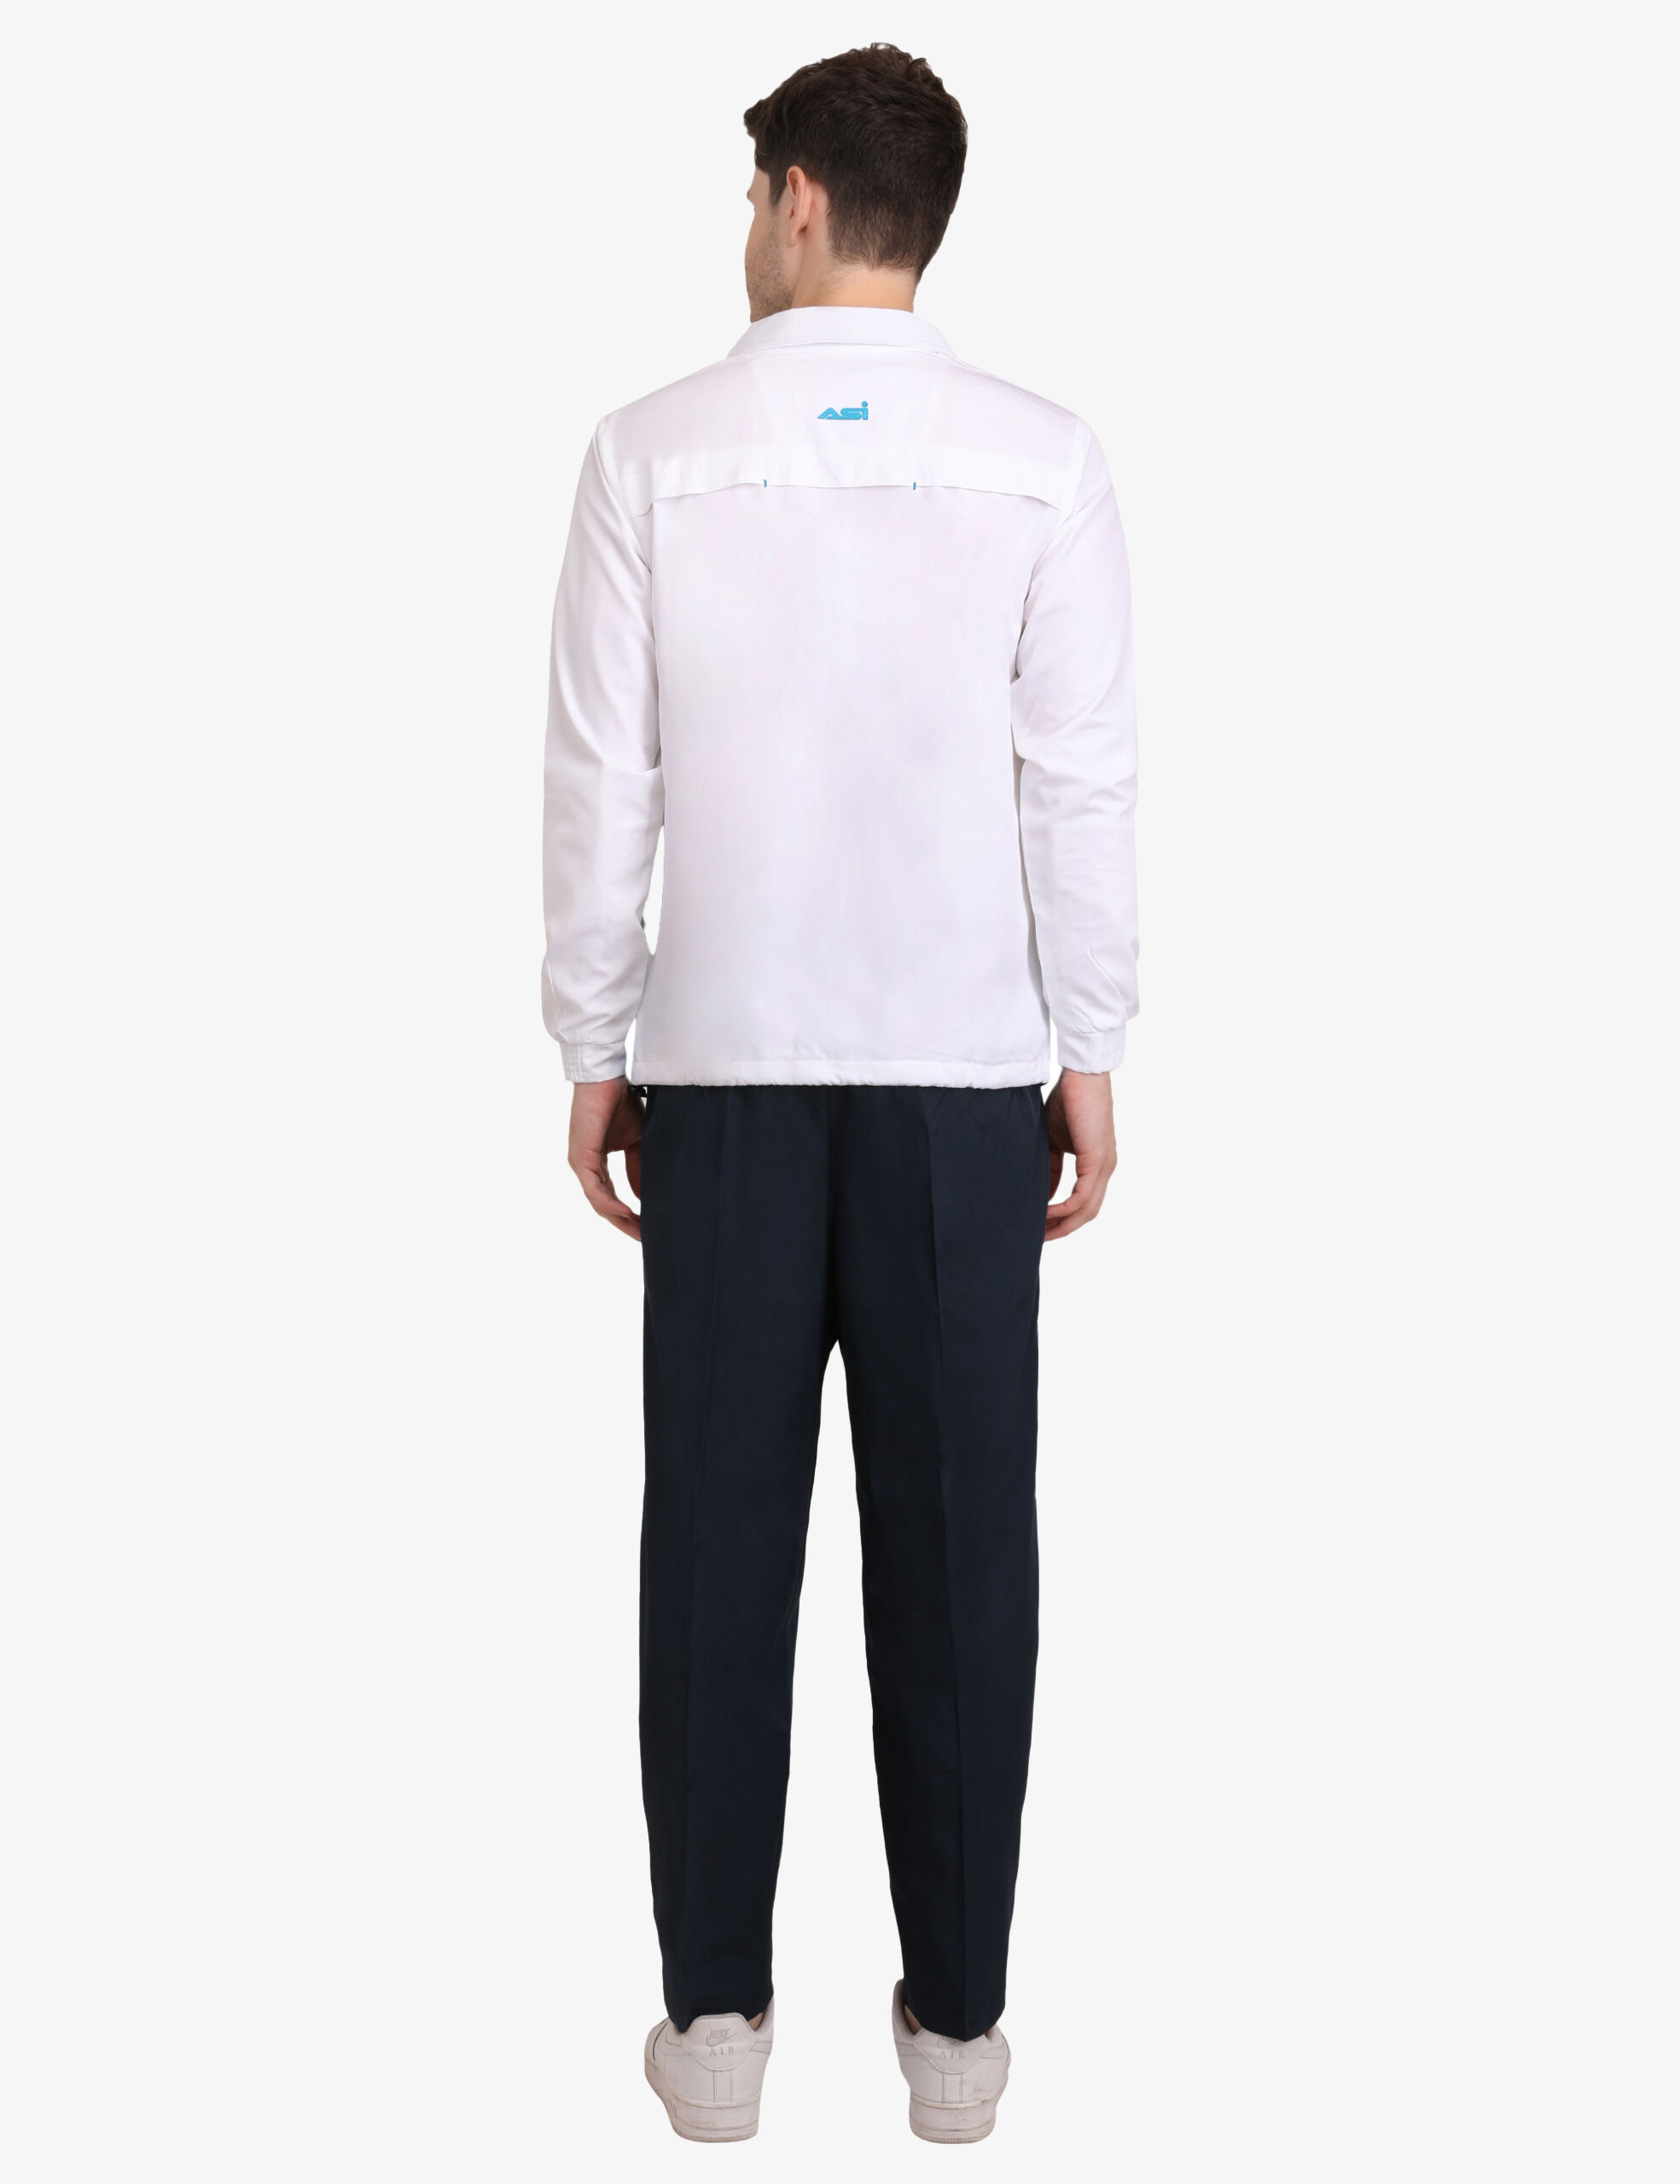 ASI Sunshine Track Suit White & Navy Blue Color